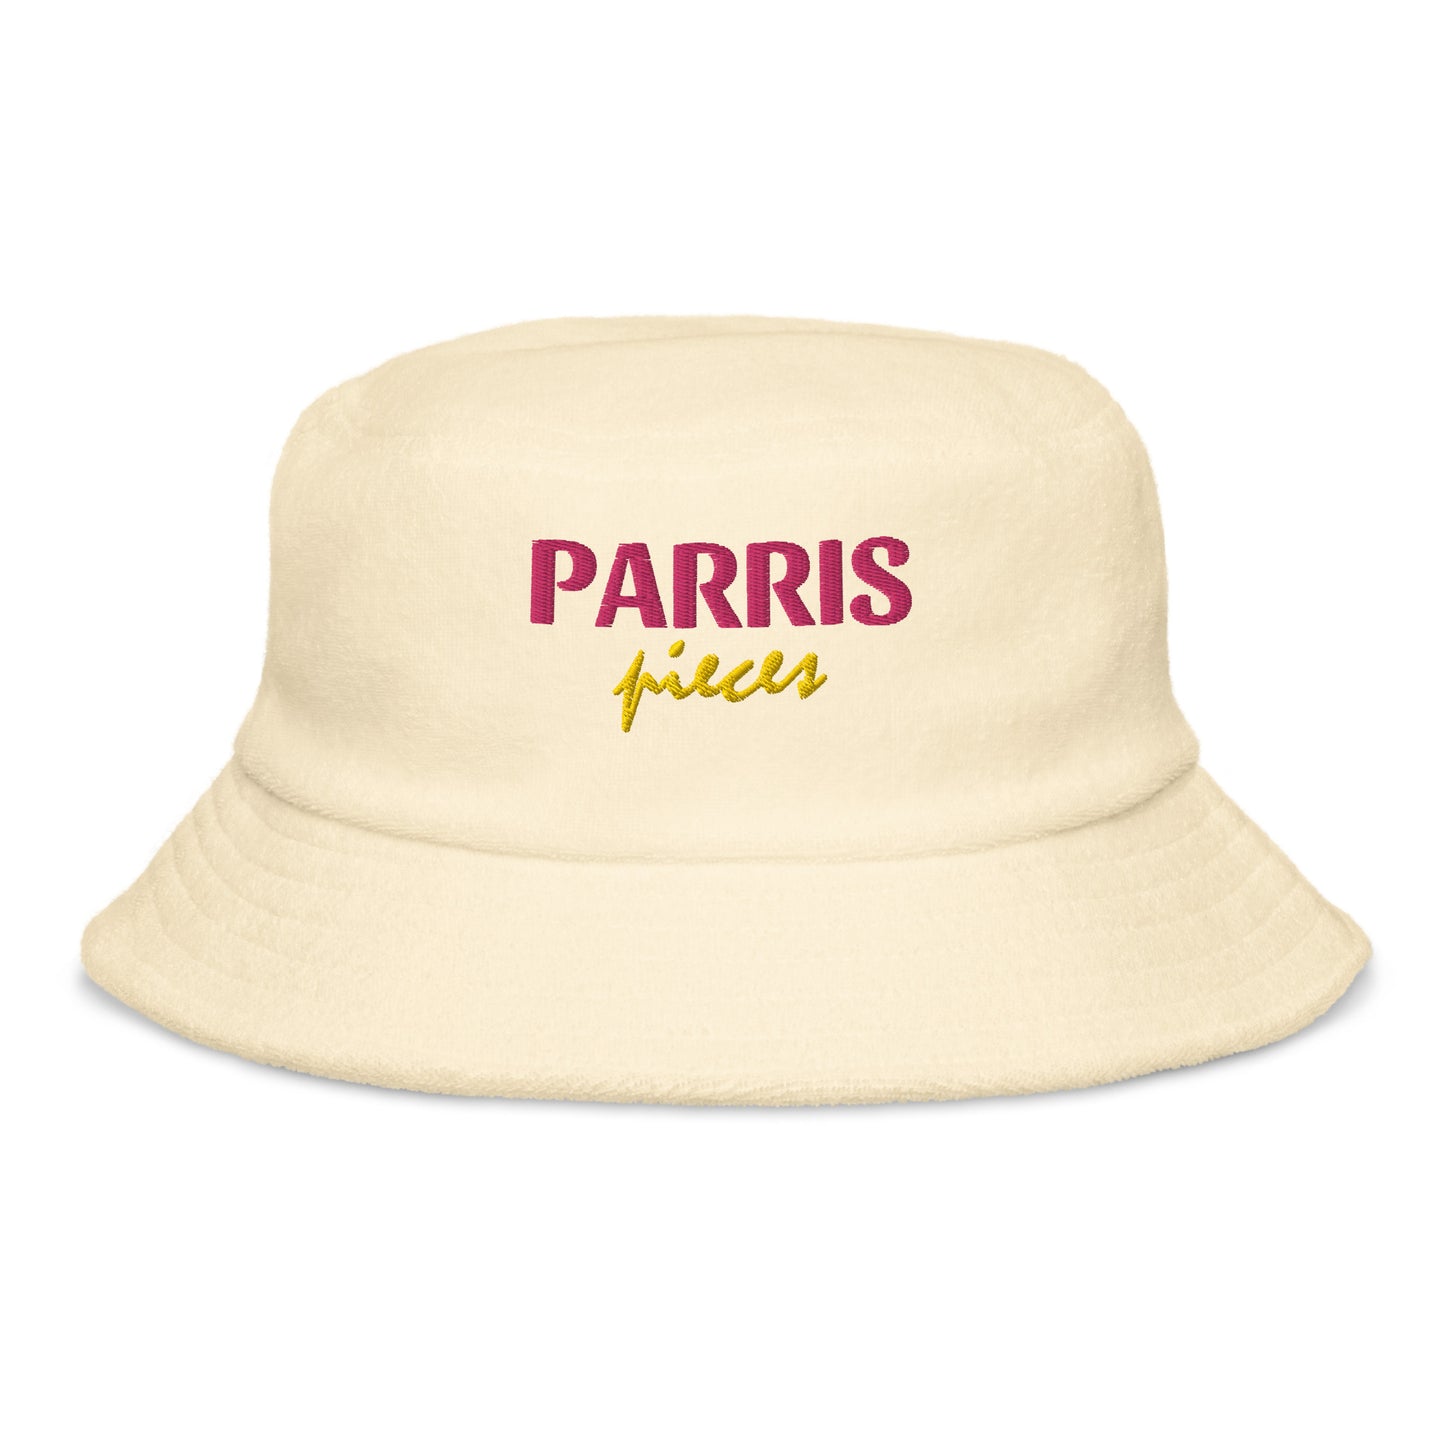 PARRISPIECES Terry Cloth Bucket Hat - ParrisPieces